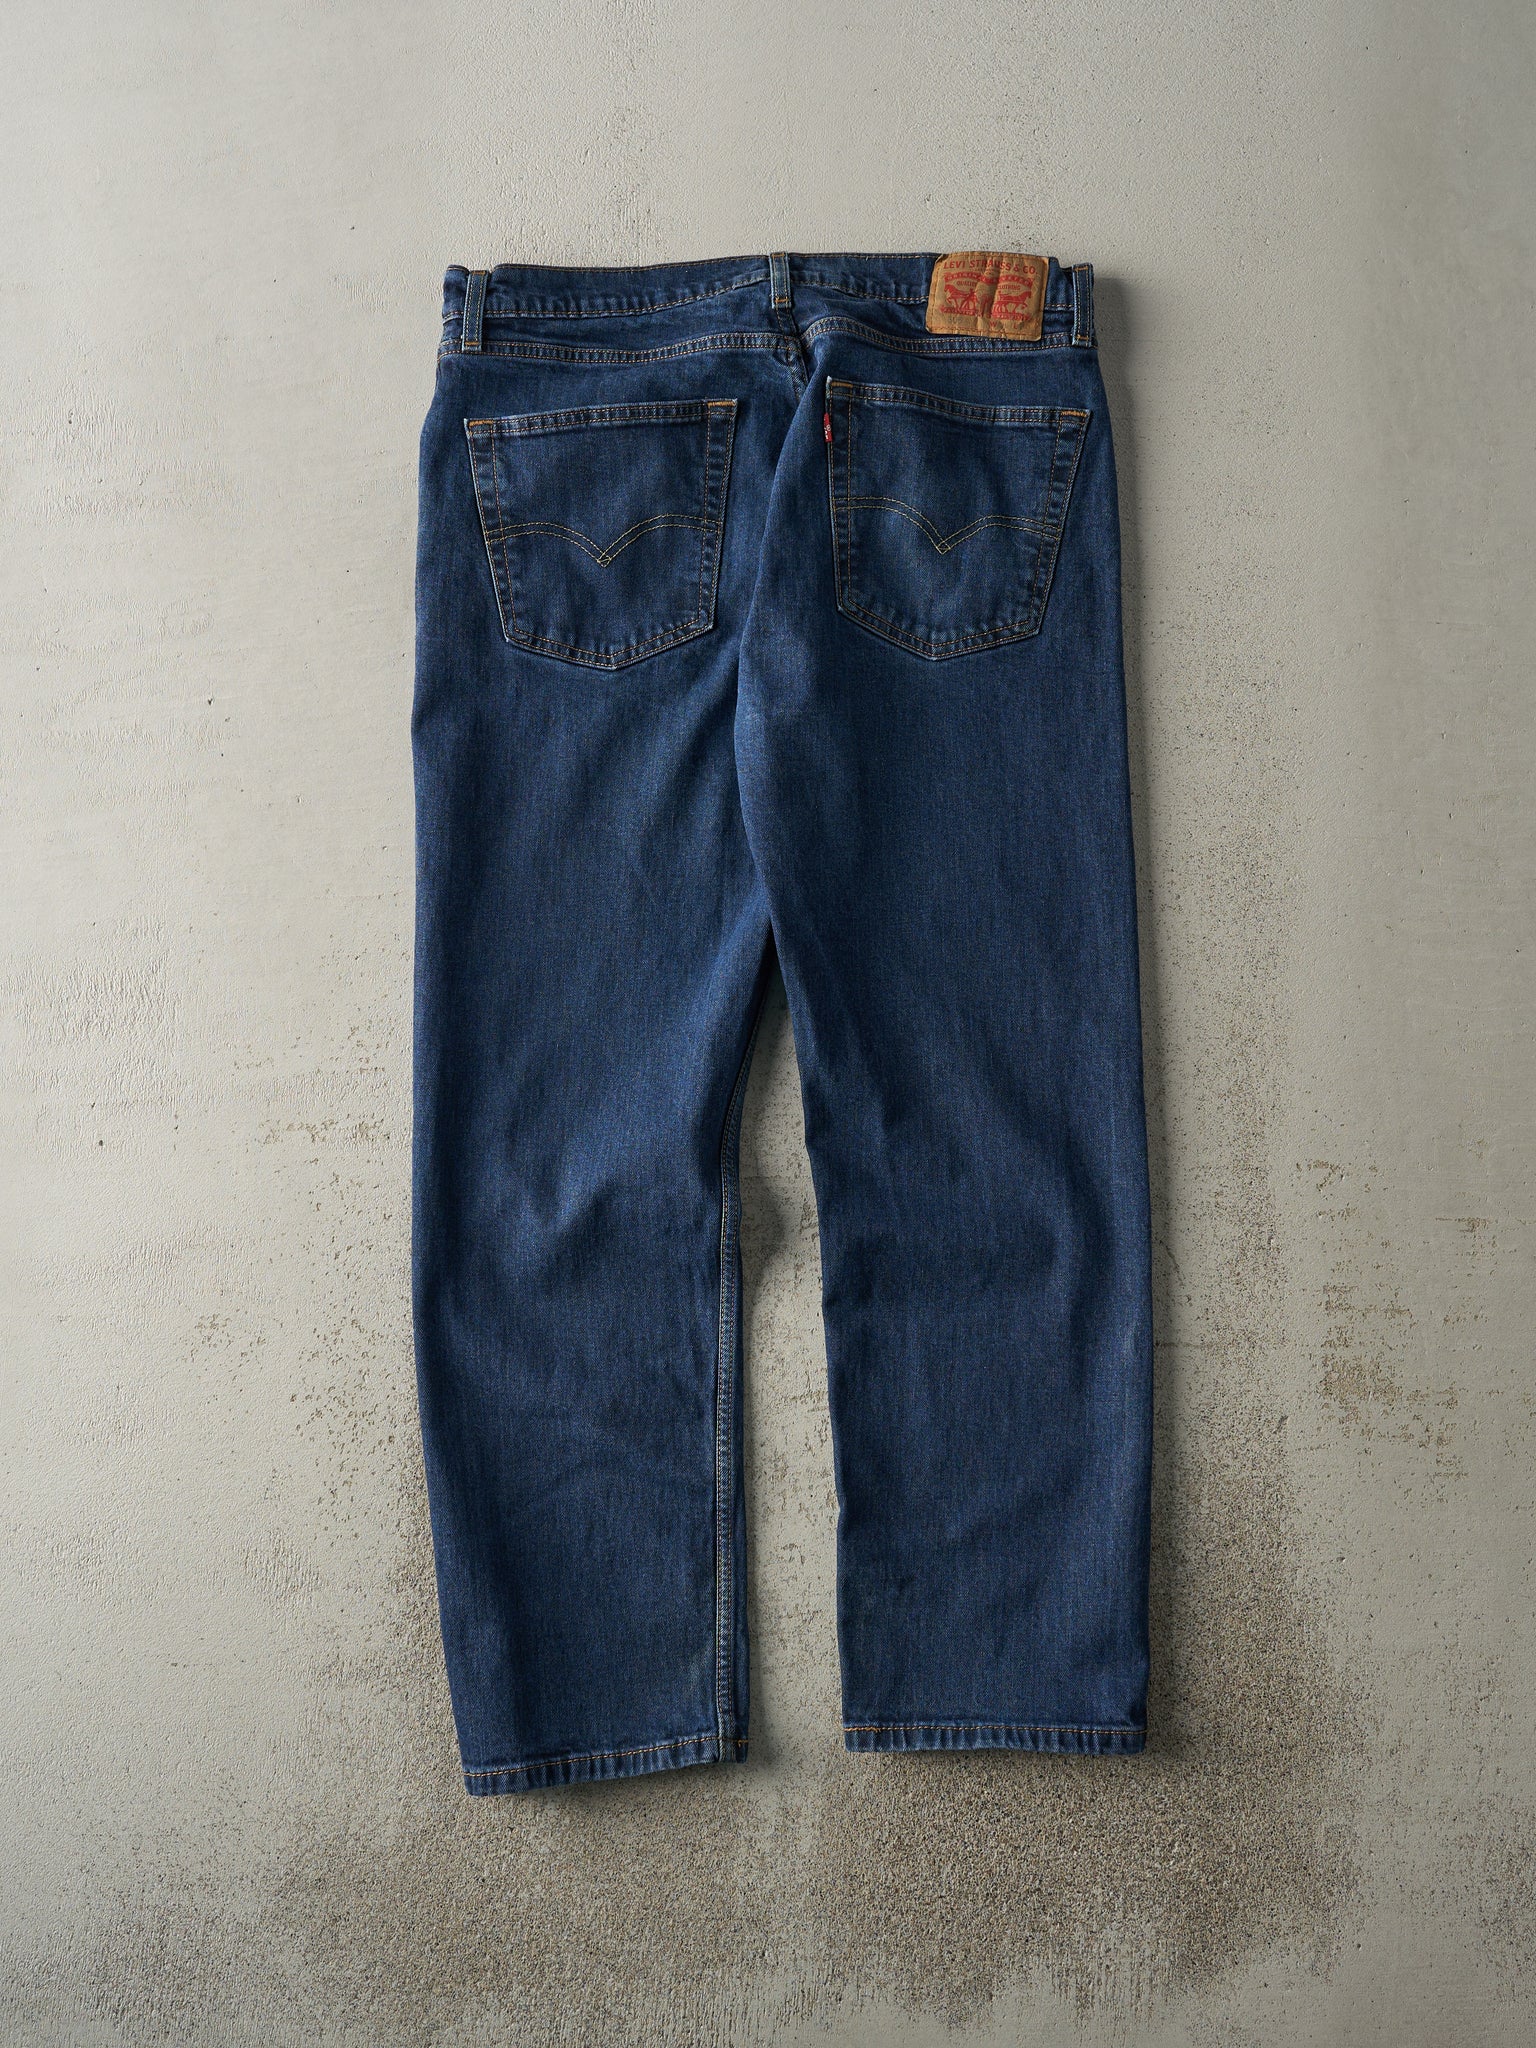 Vintage Y2K Dark Wash Levi's 505 Jeans (35.5x29)